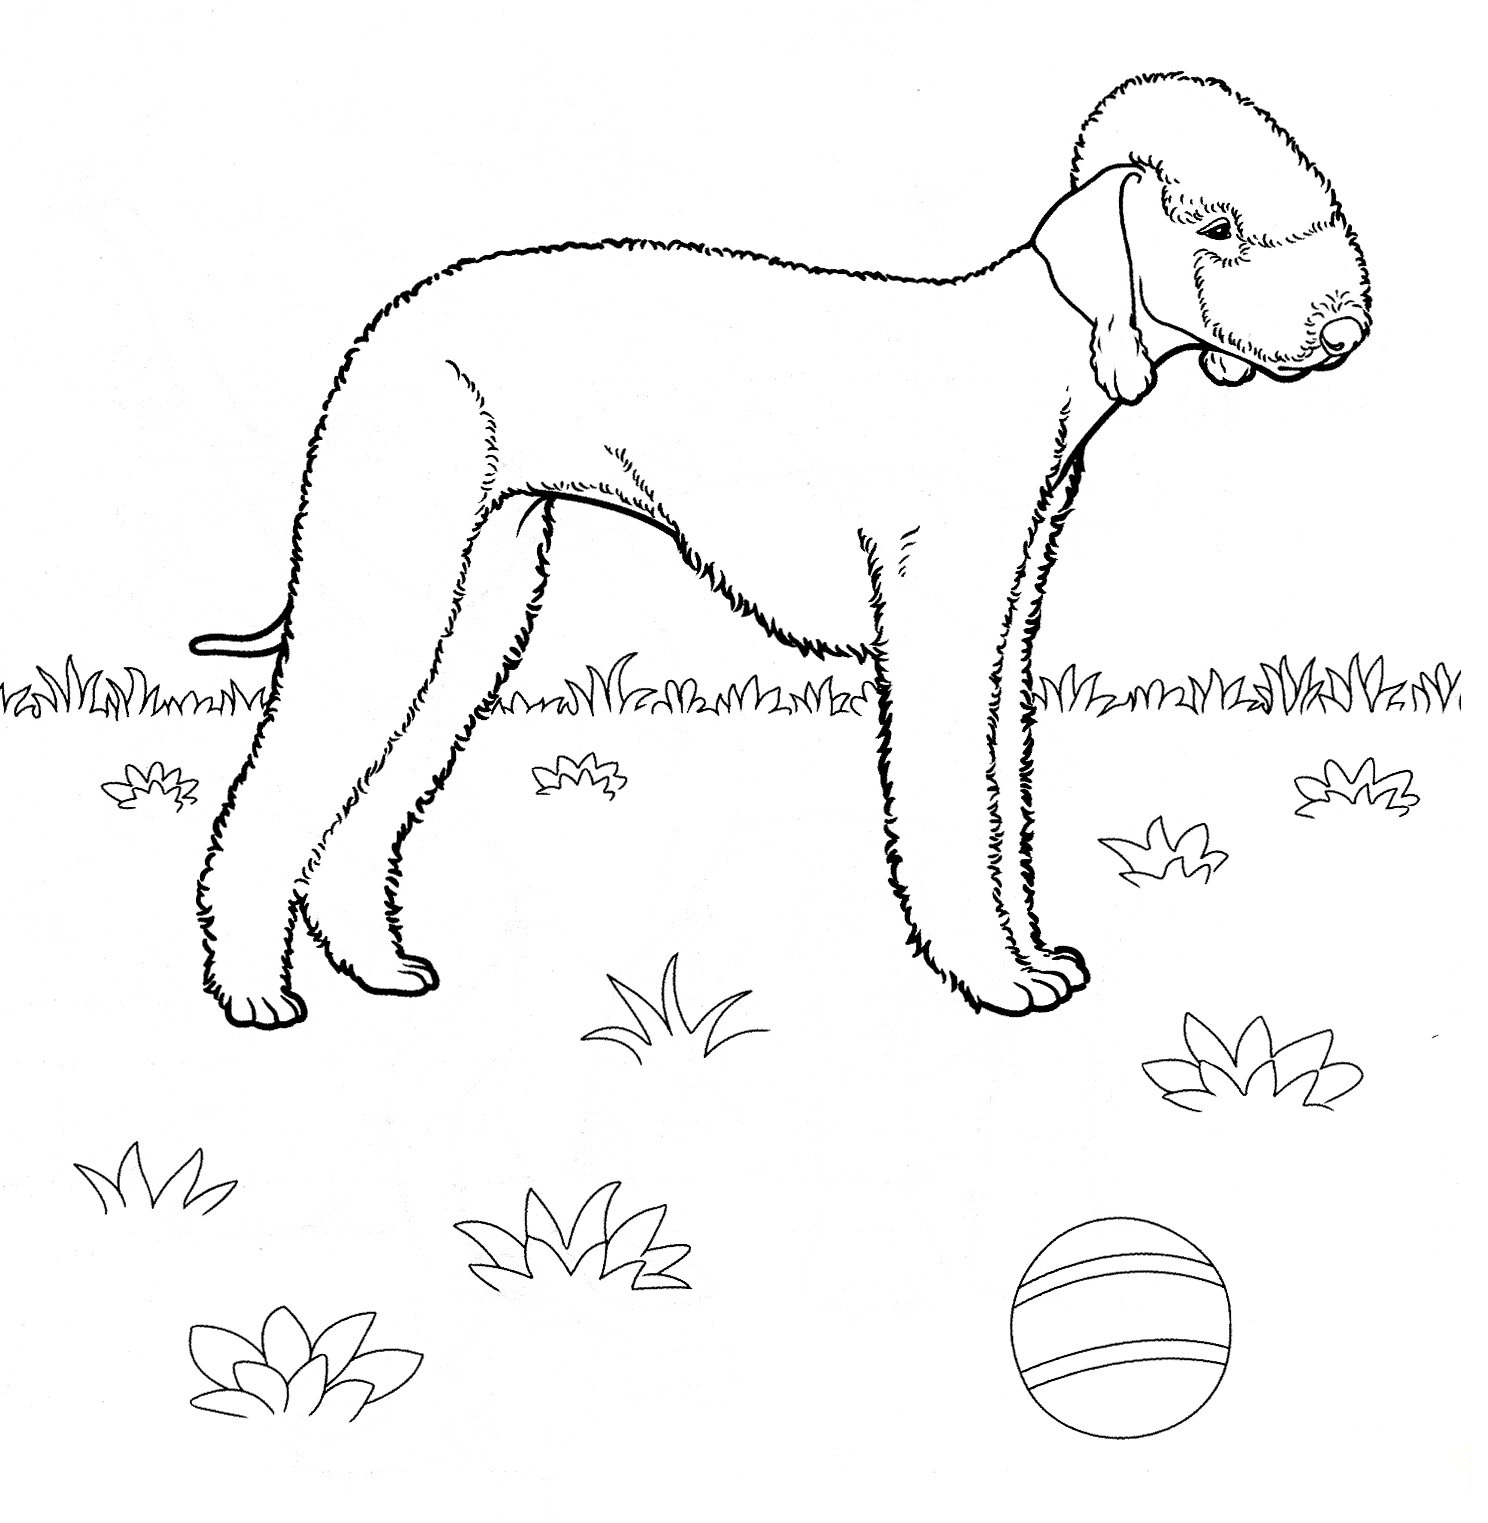 Bedlington Terrier de Cães